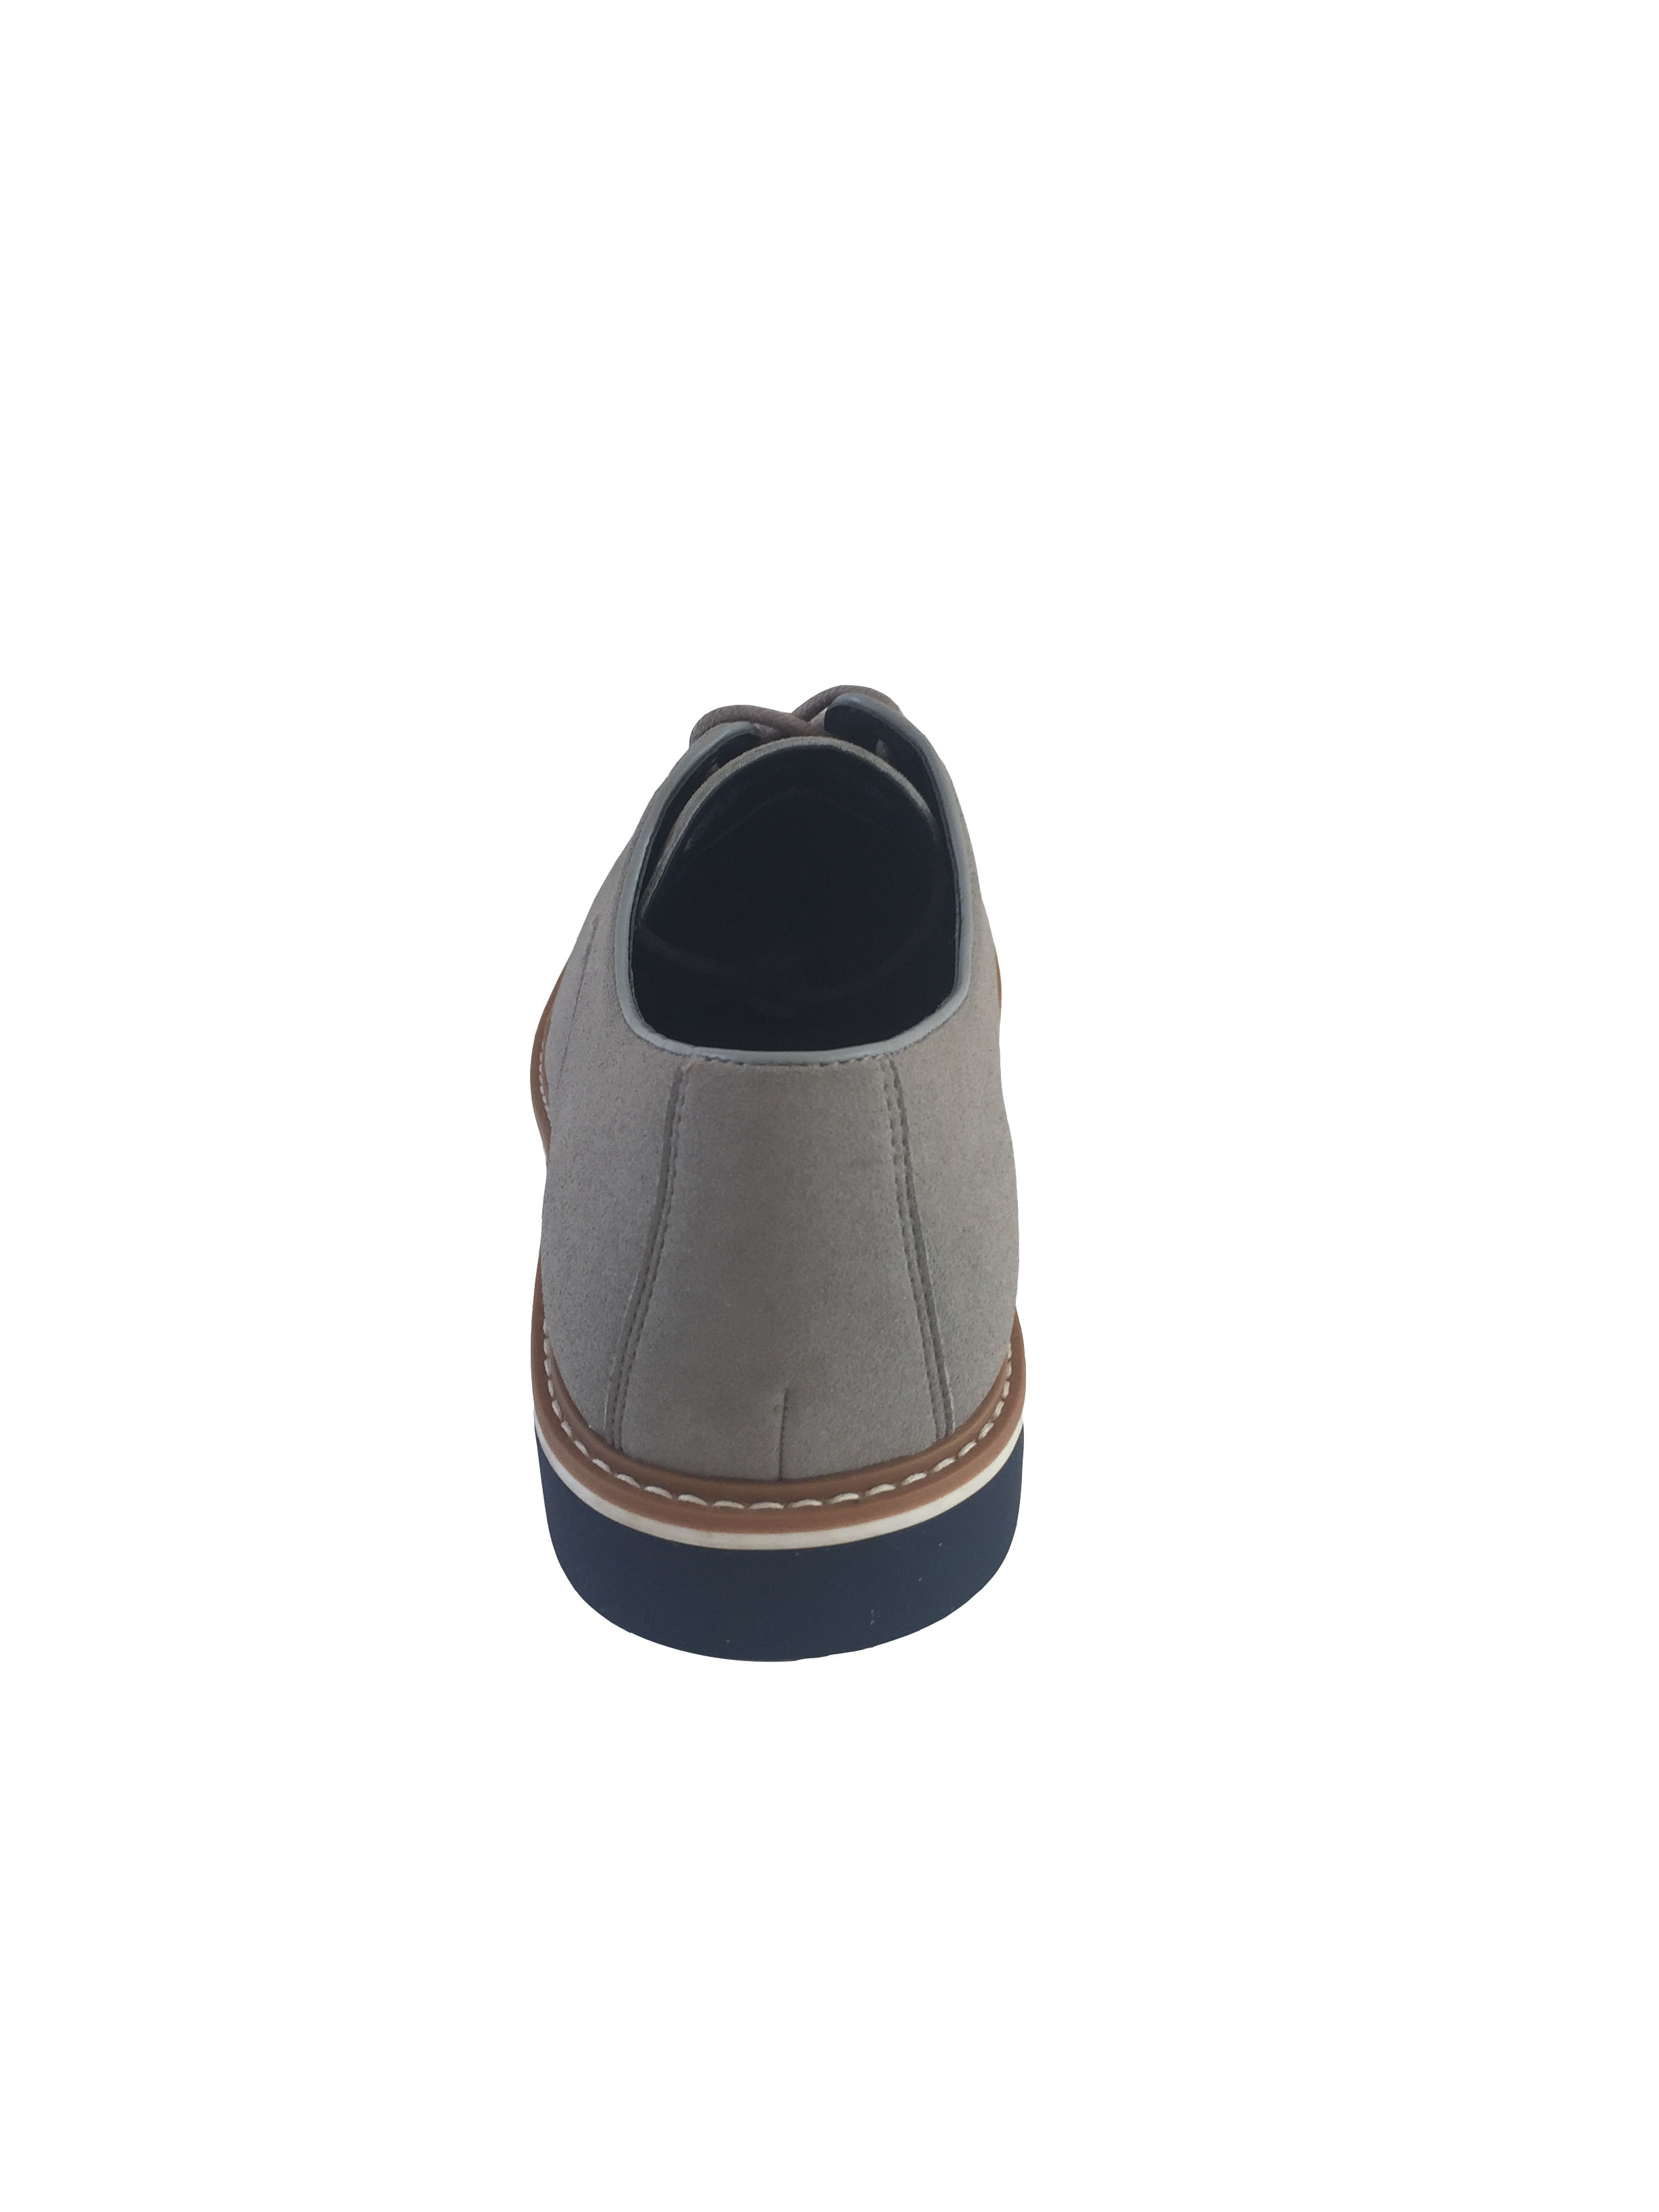 George Men's Plain Toe Casual Oxford Shoe - image 3 of 4